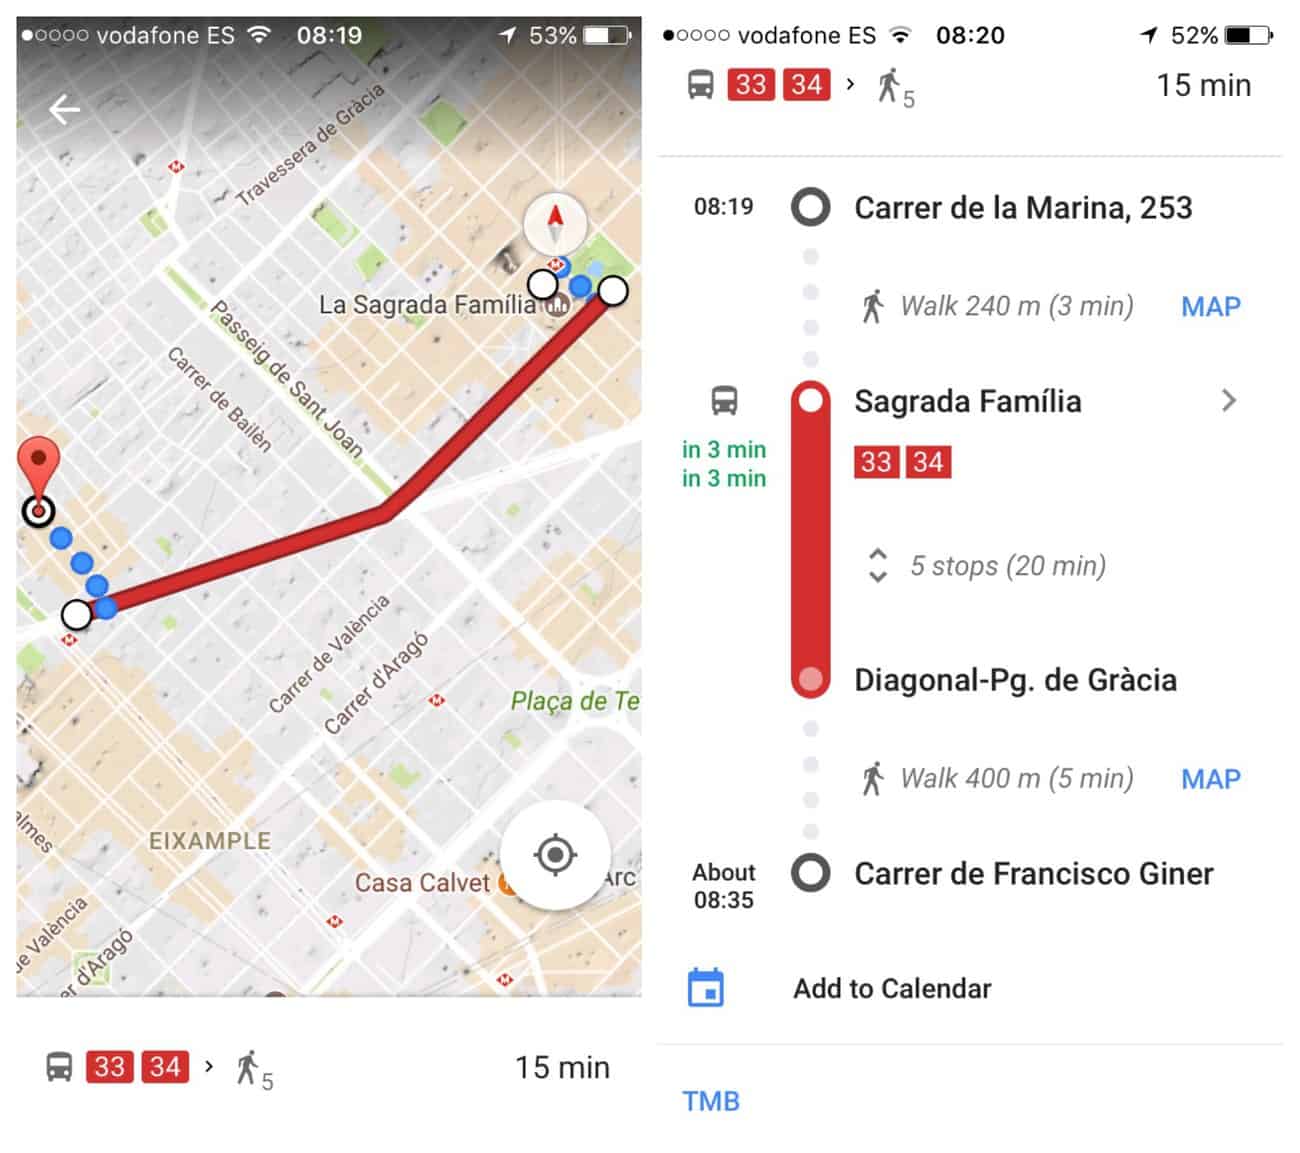 Barcelona - Google maps directions